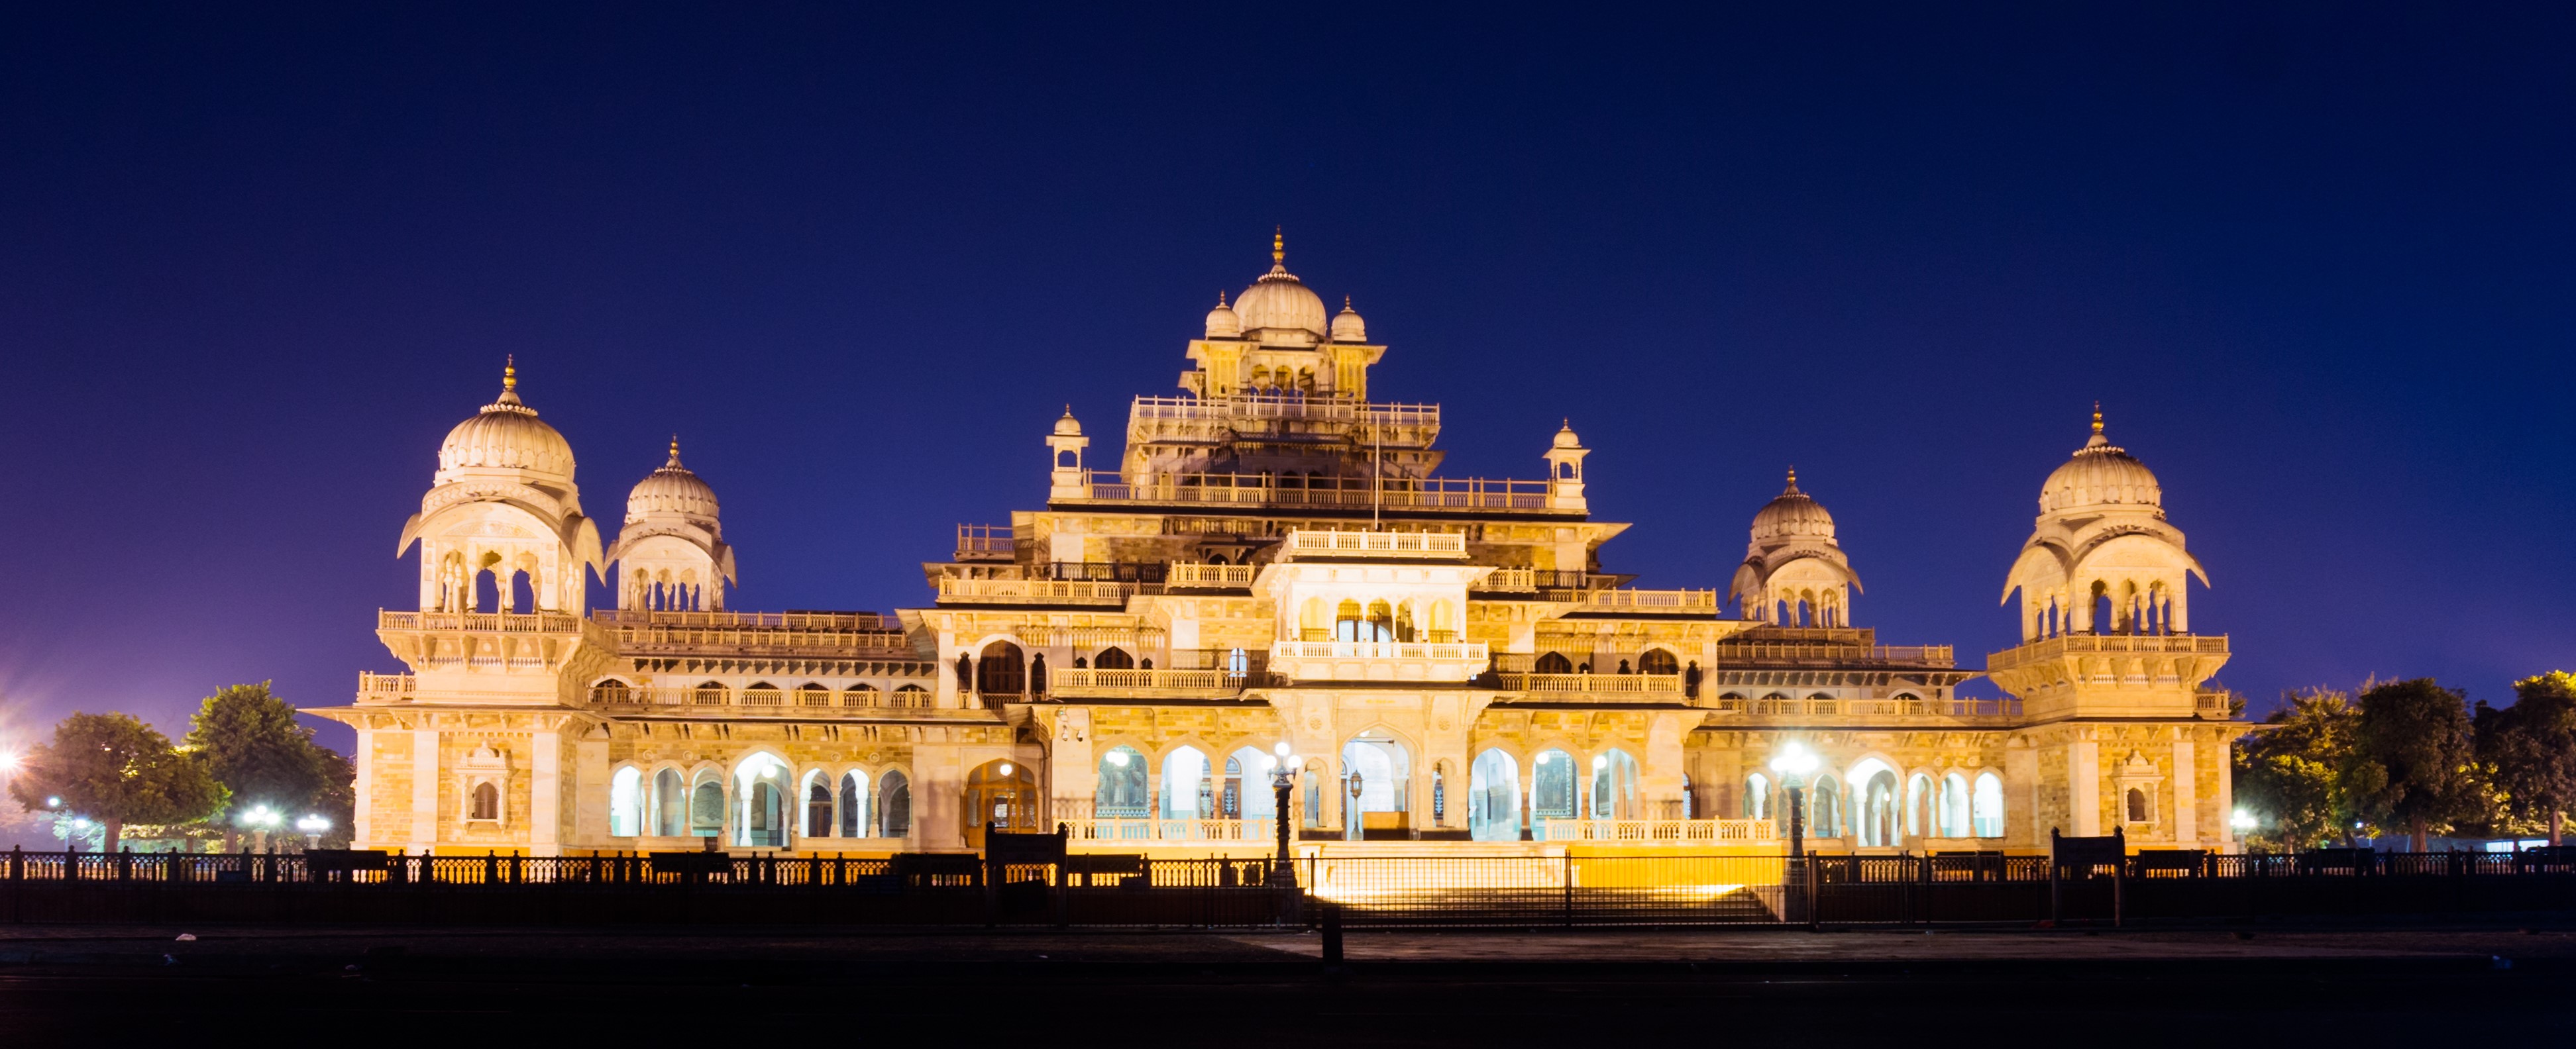 Tourist places you should visit in Jaipur - Best Places of Interest